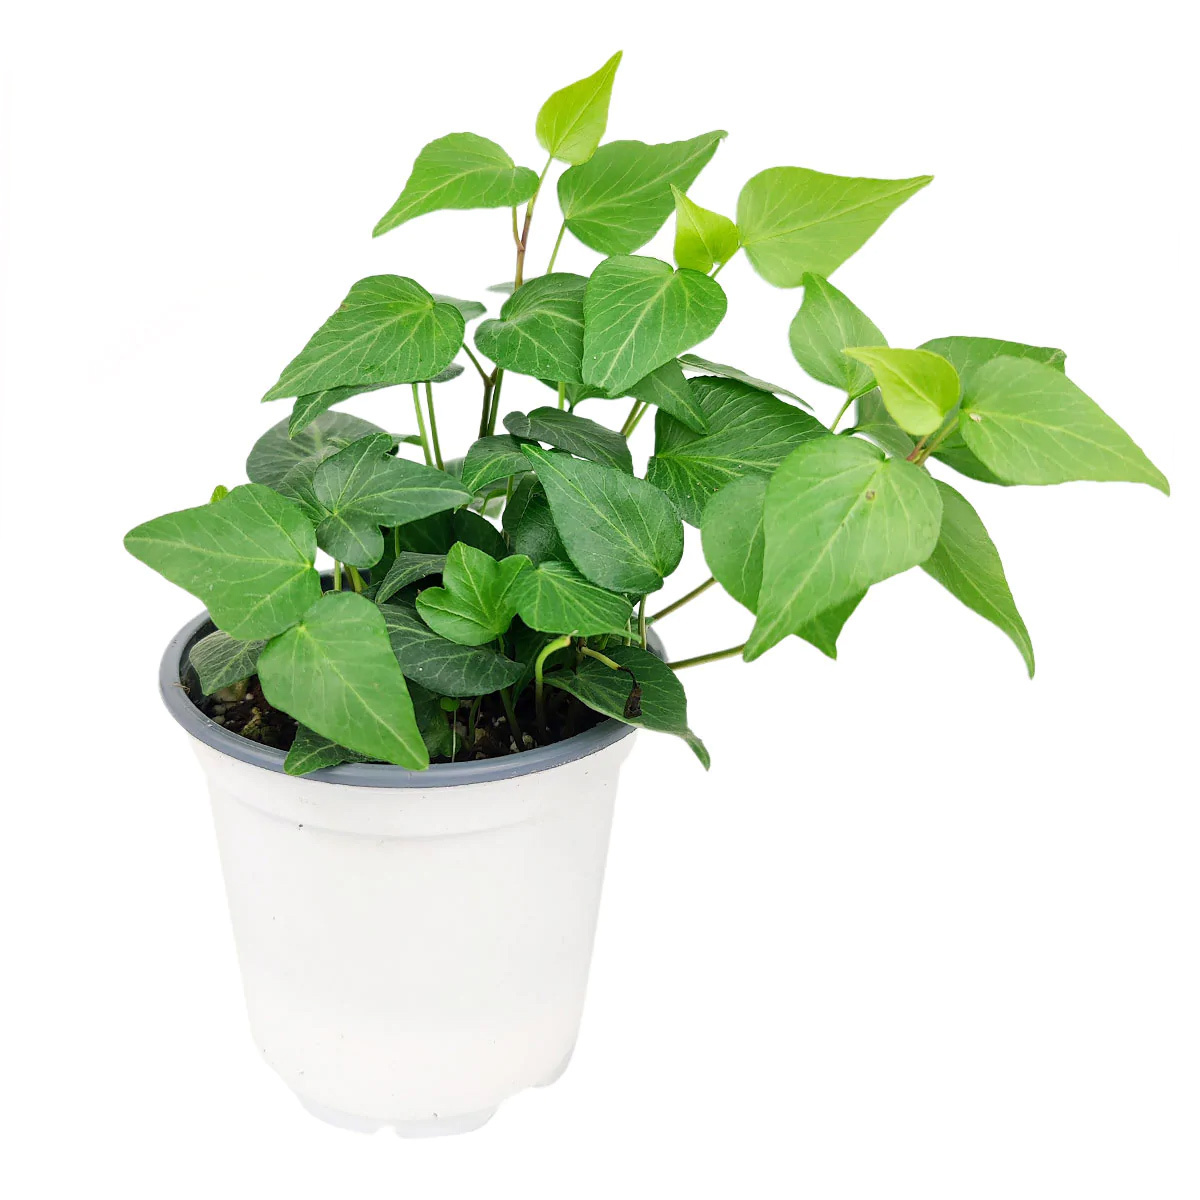 ivy vine, english ivy plant hedera helix for sale, popular indoor houseplant, hanging basket plant, groundcover plants